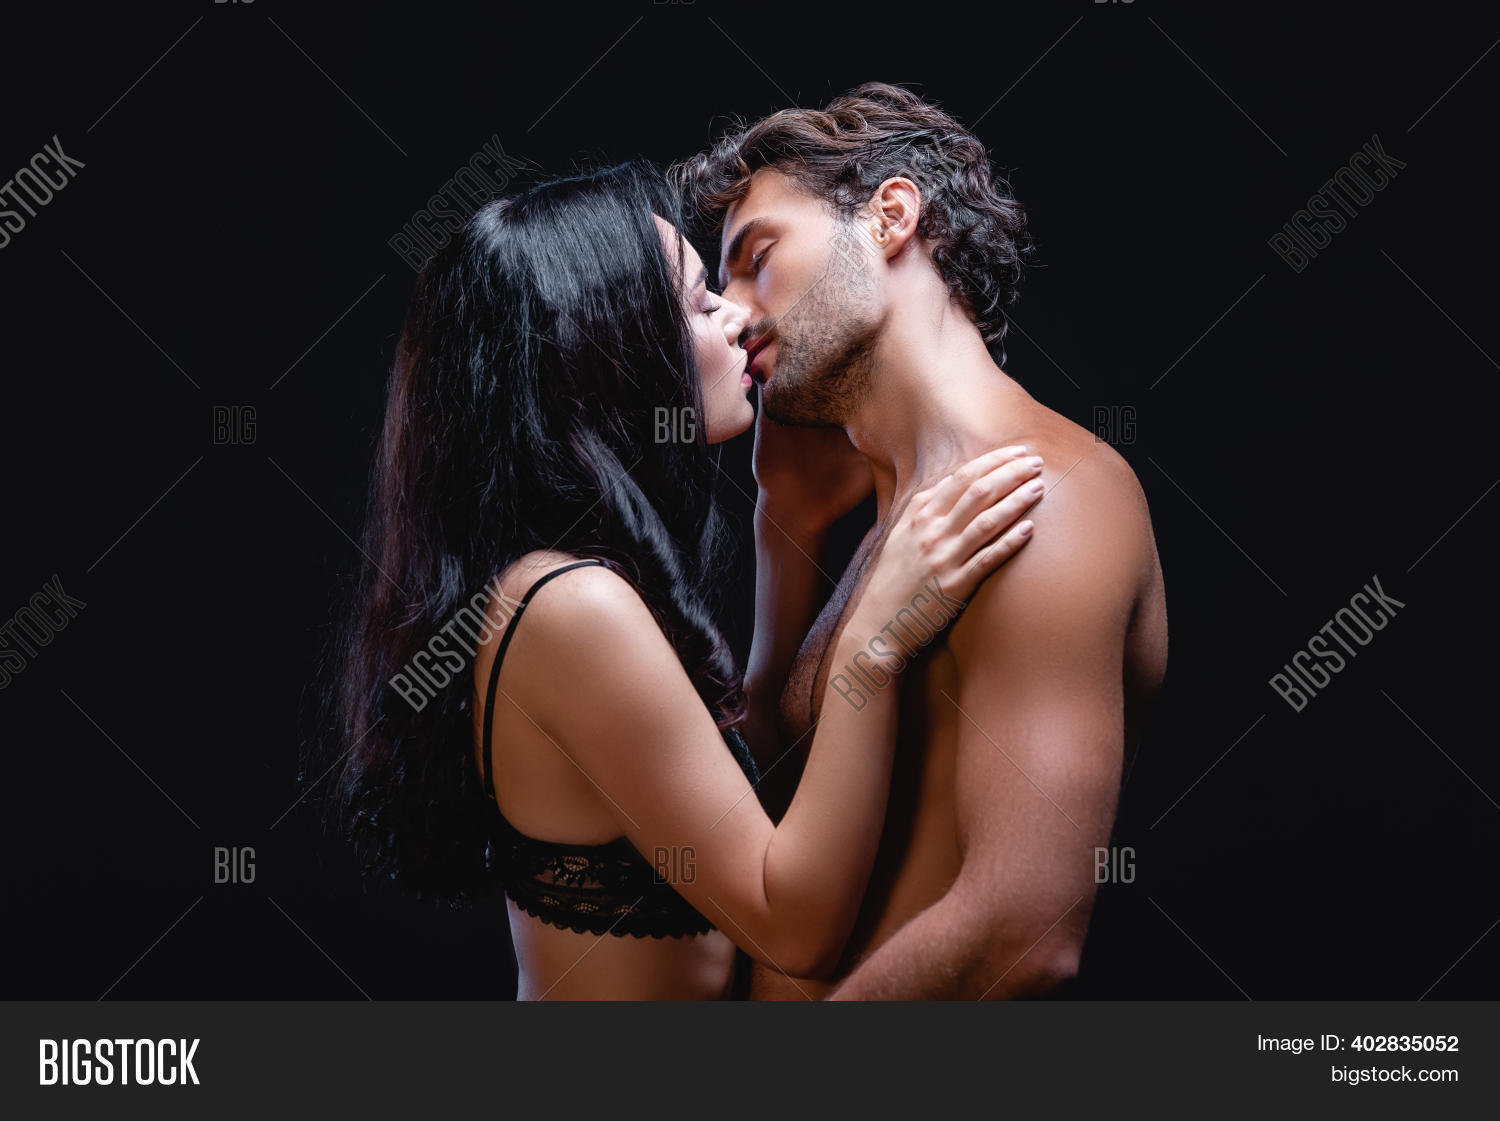 bre perry add sexy women kissing men photo